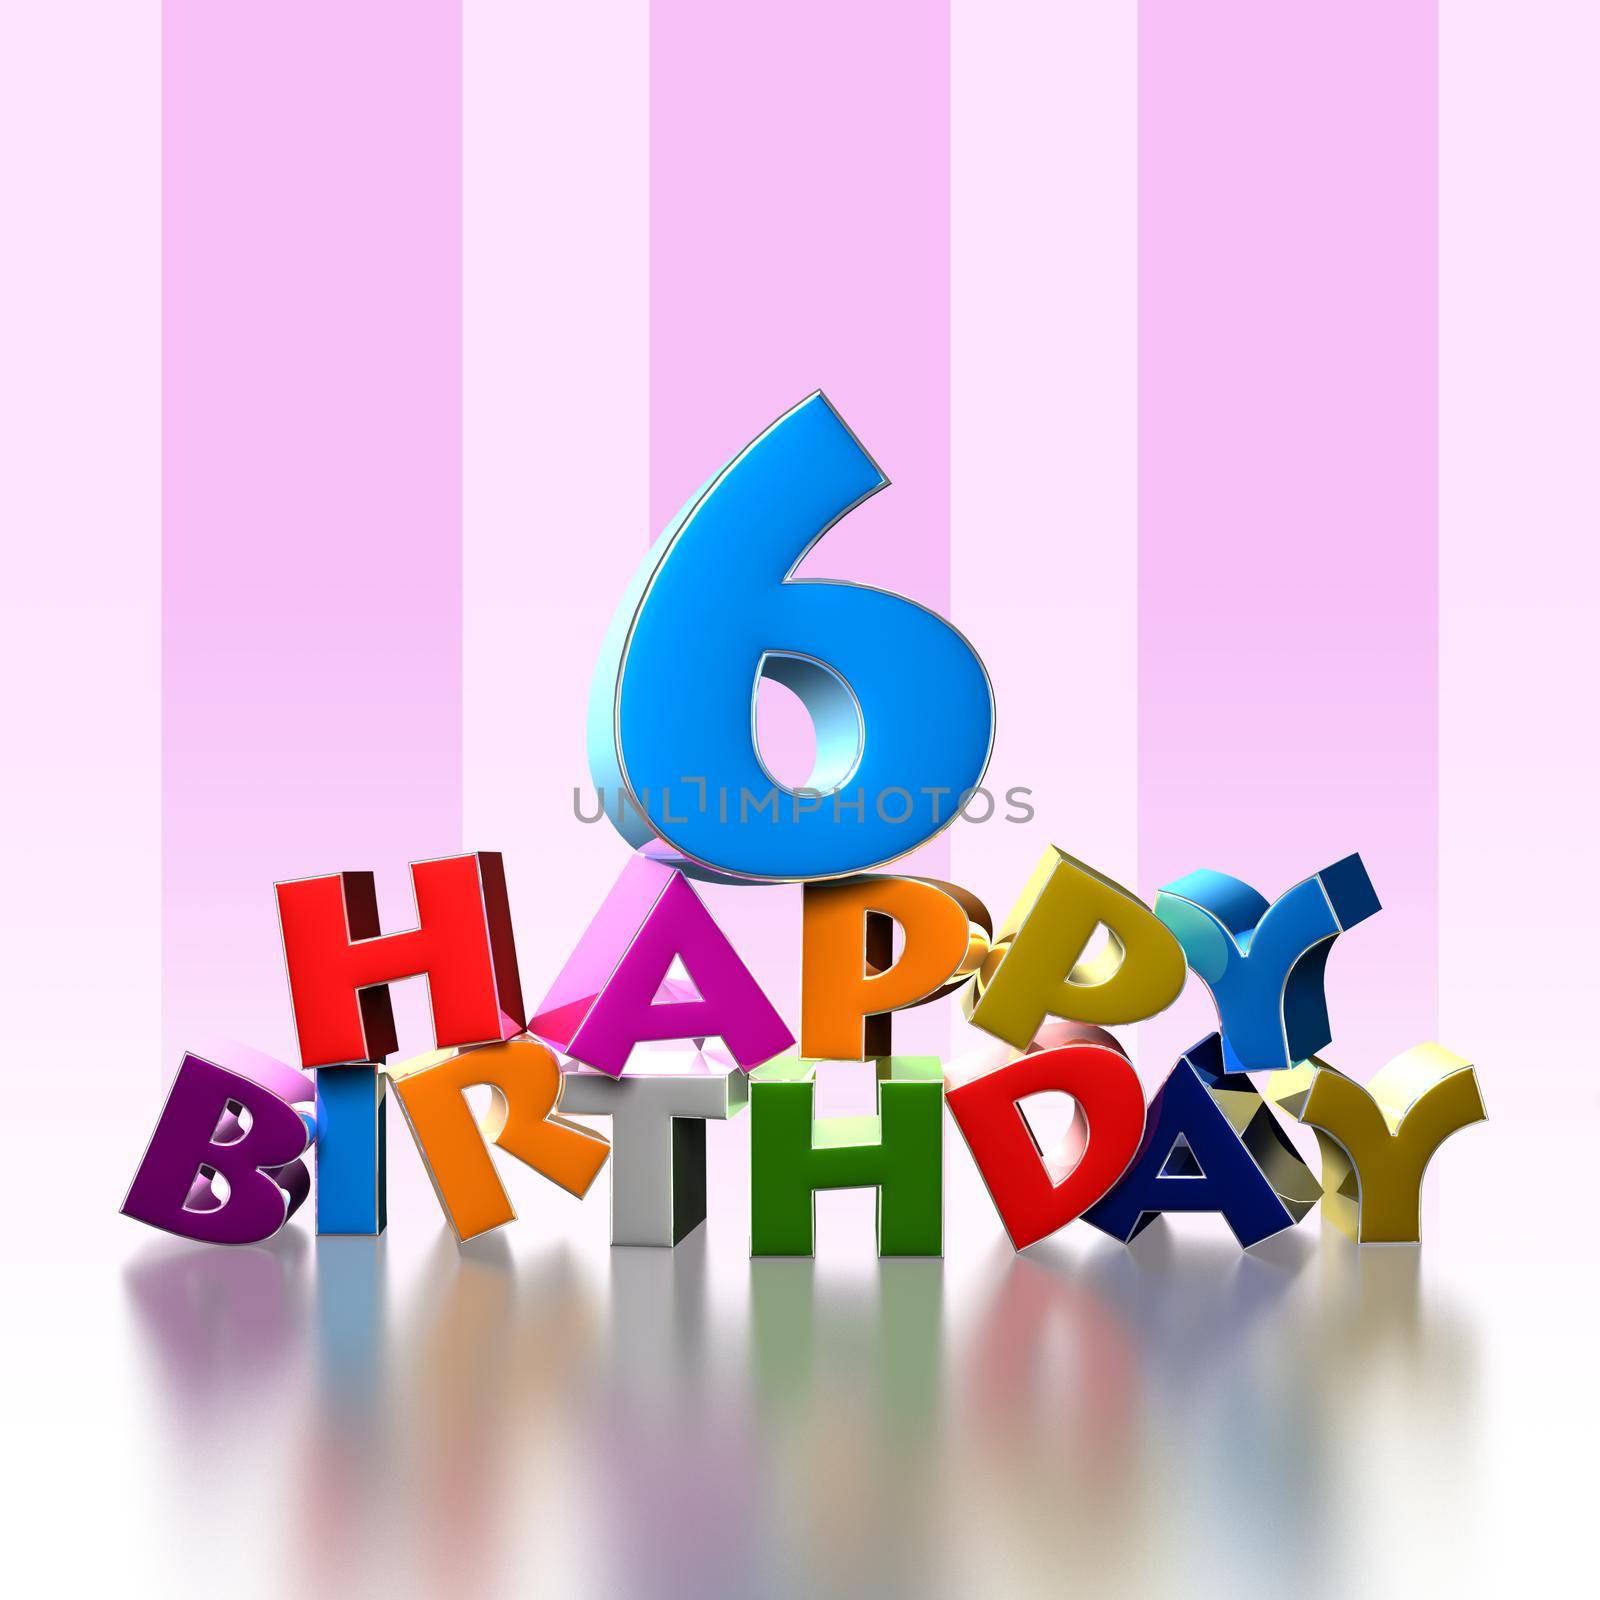 6 happy birthday 3D illustration on pink background. by thitimontoyai